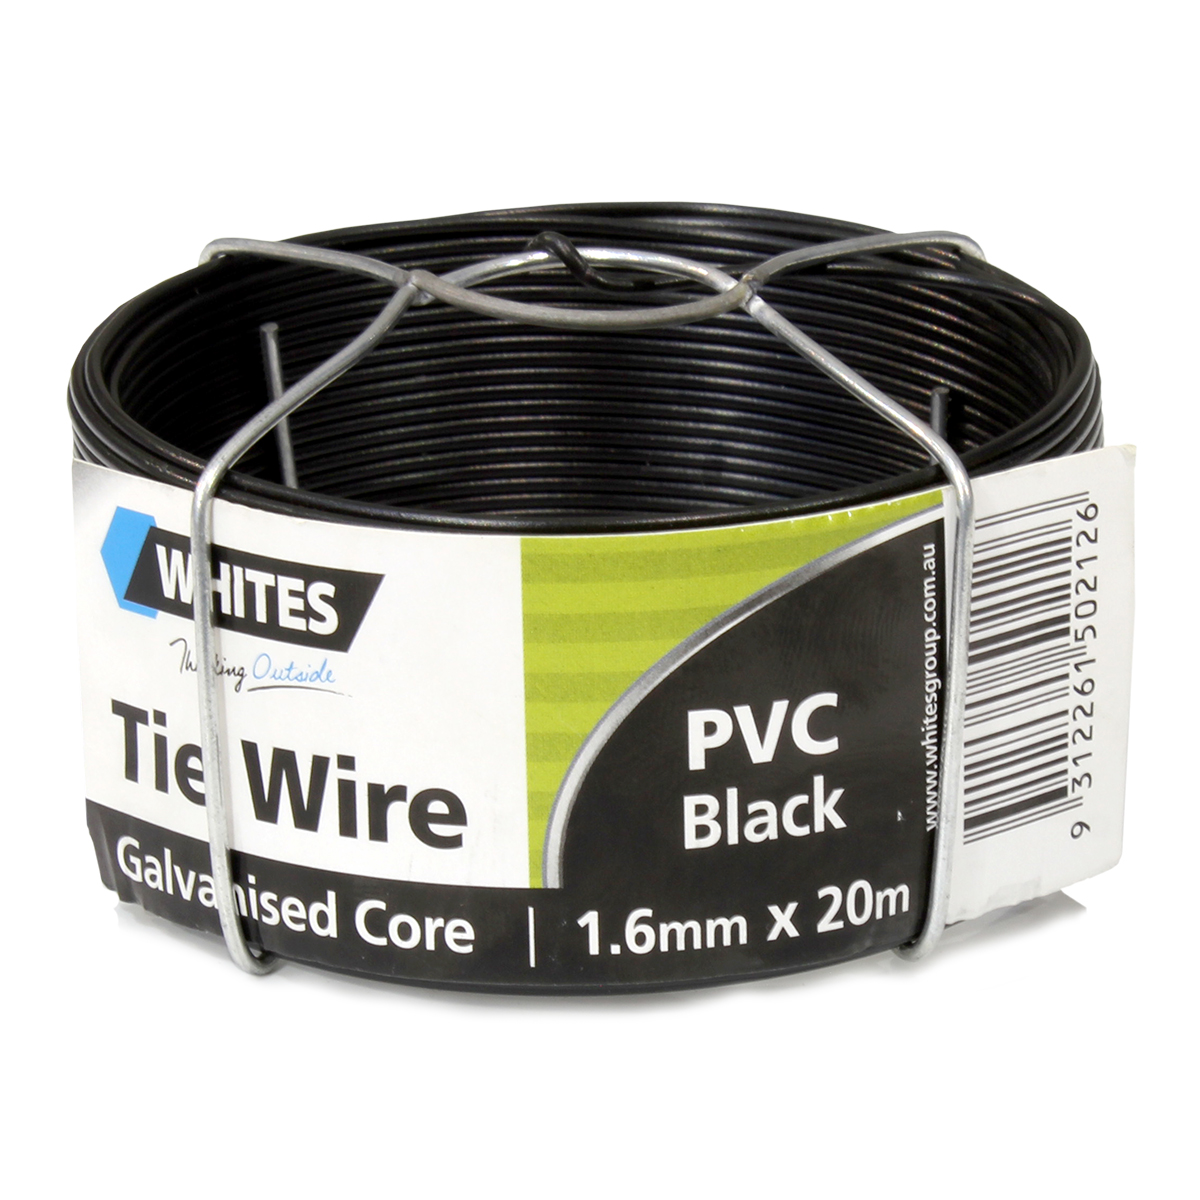 50212 pvc tie wire black 20m